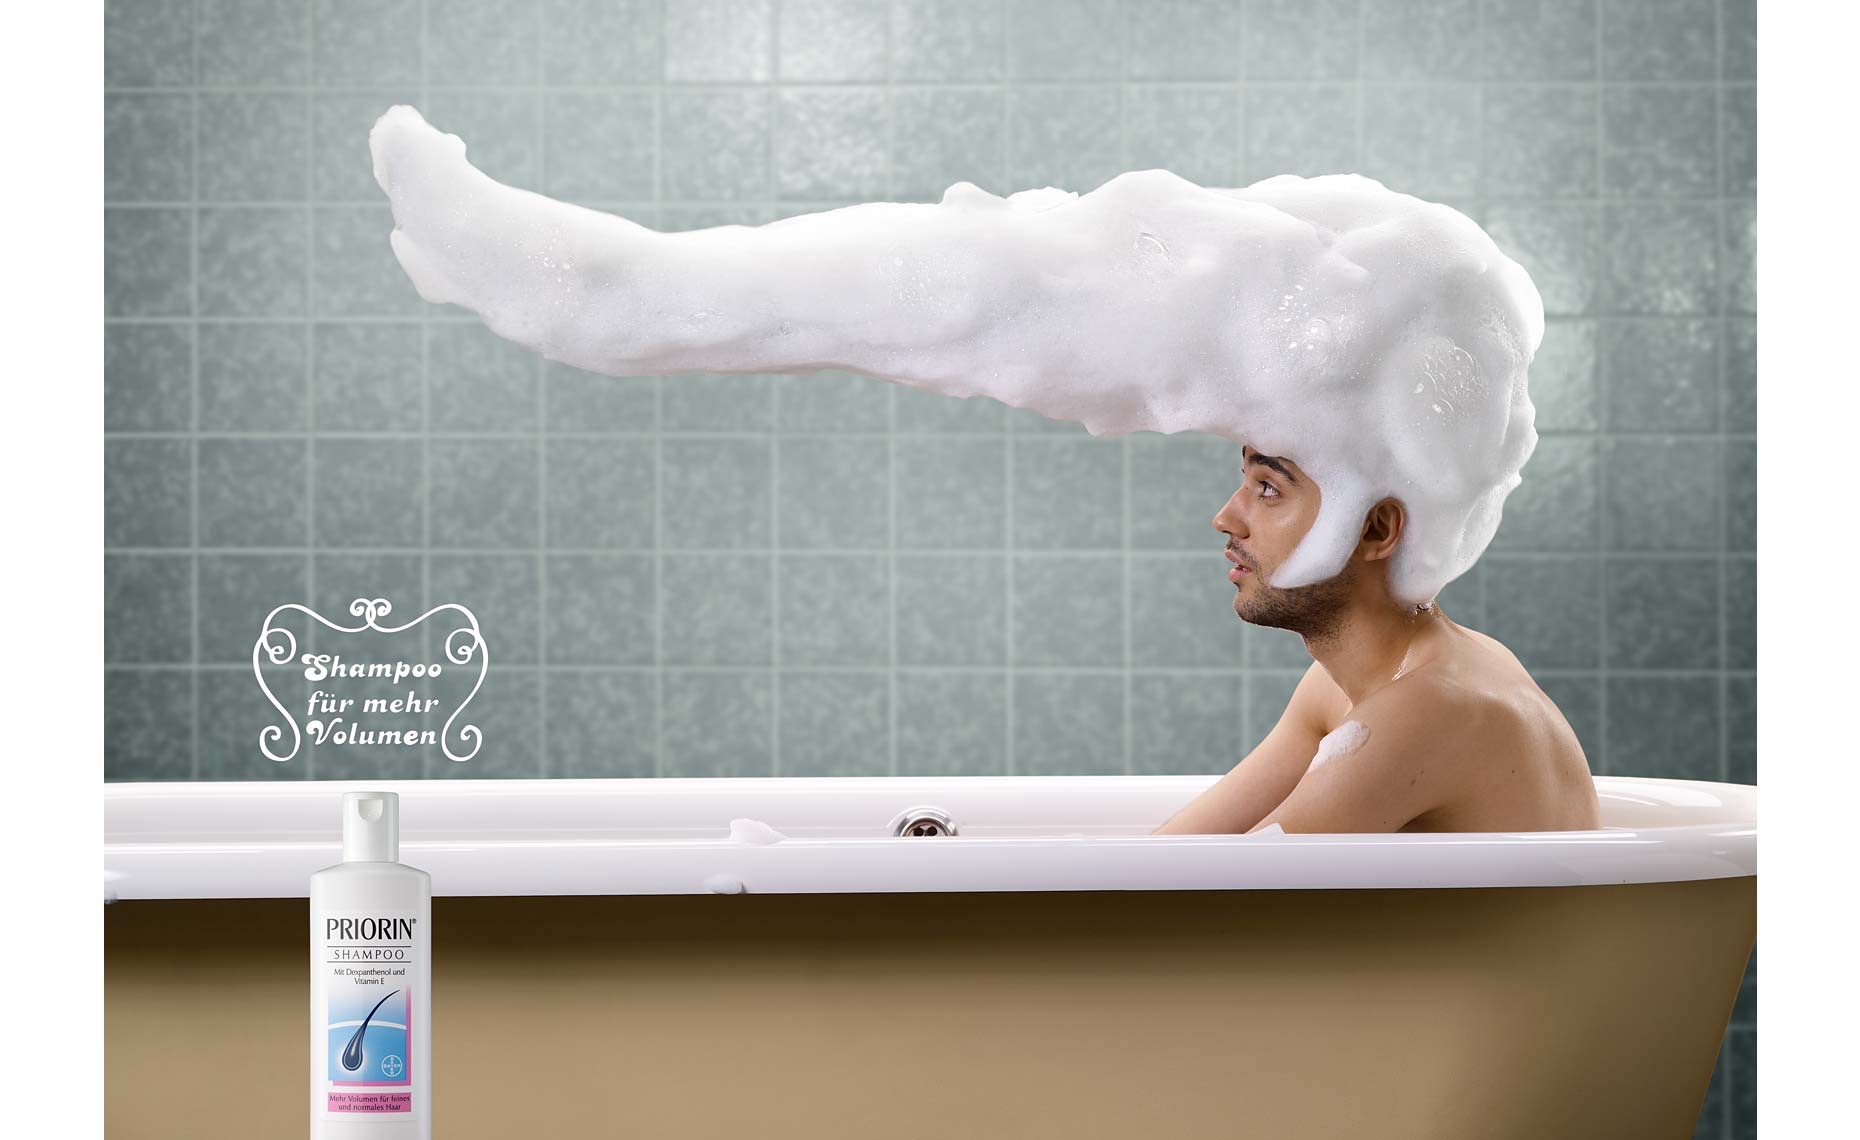 Extra Strong Priorin Shampoo campaign - Marc Wuchner BFF Professional - Stills -  Produktfotografie Frankfurt